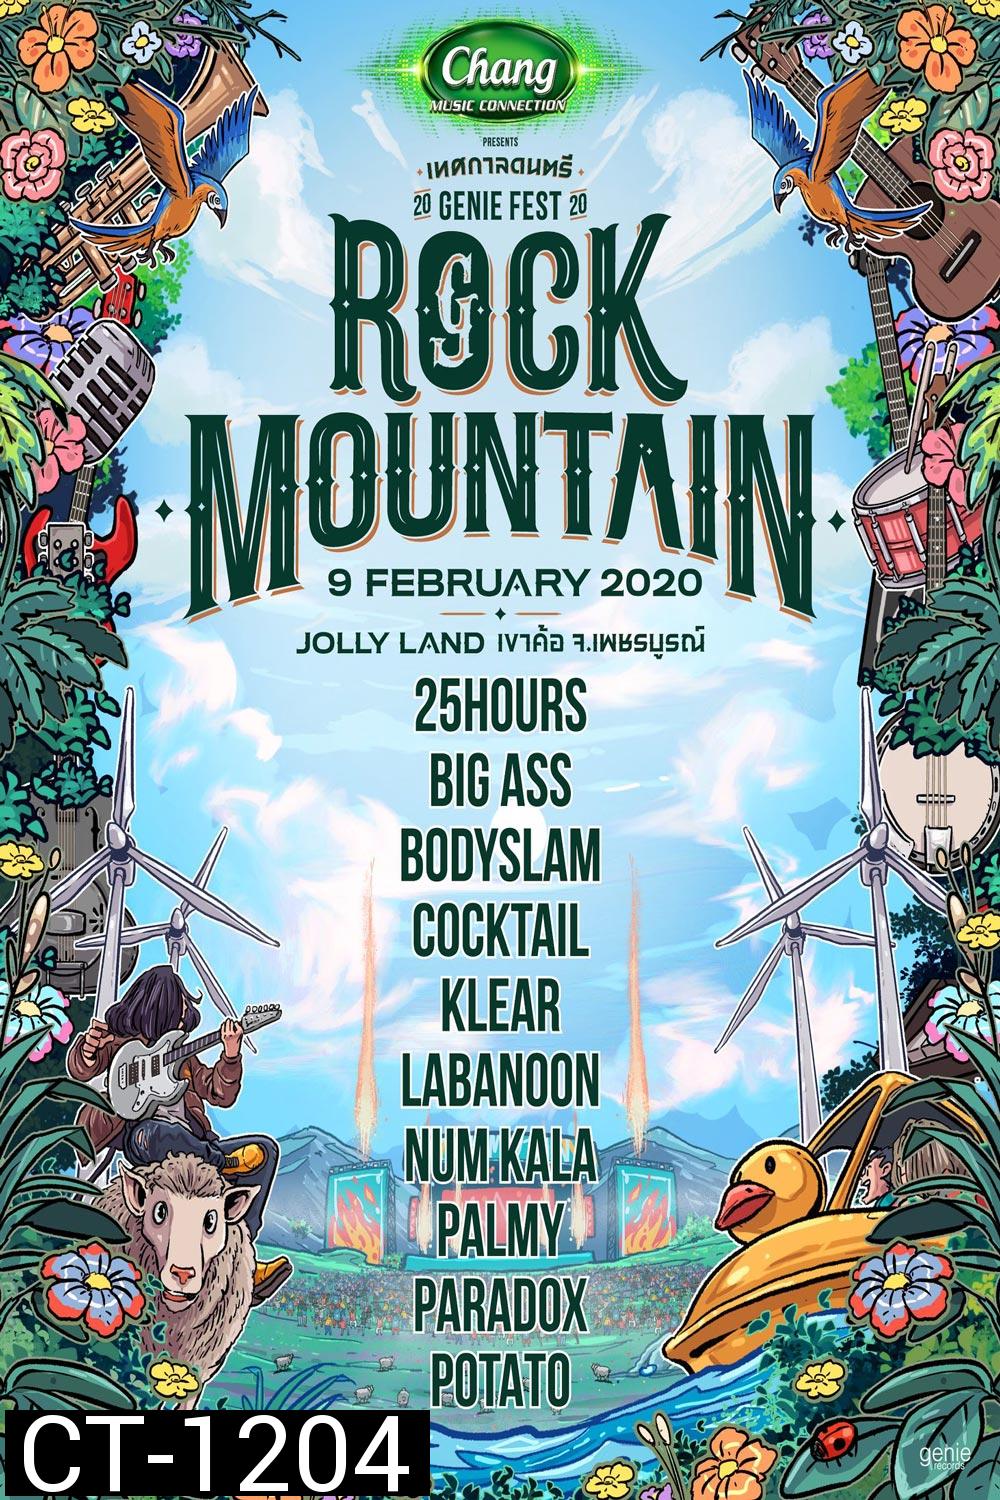 GENIE FEST 2020 Rock Mountain (2020)